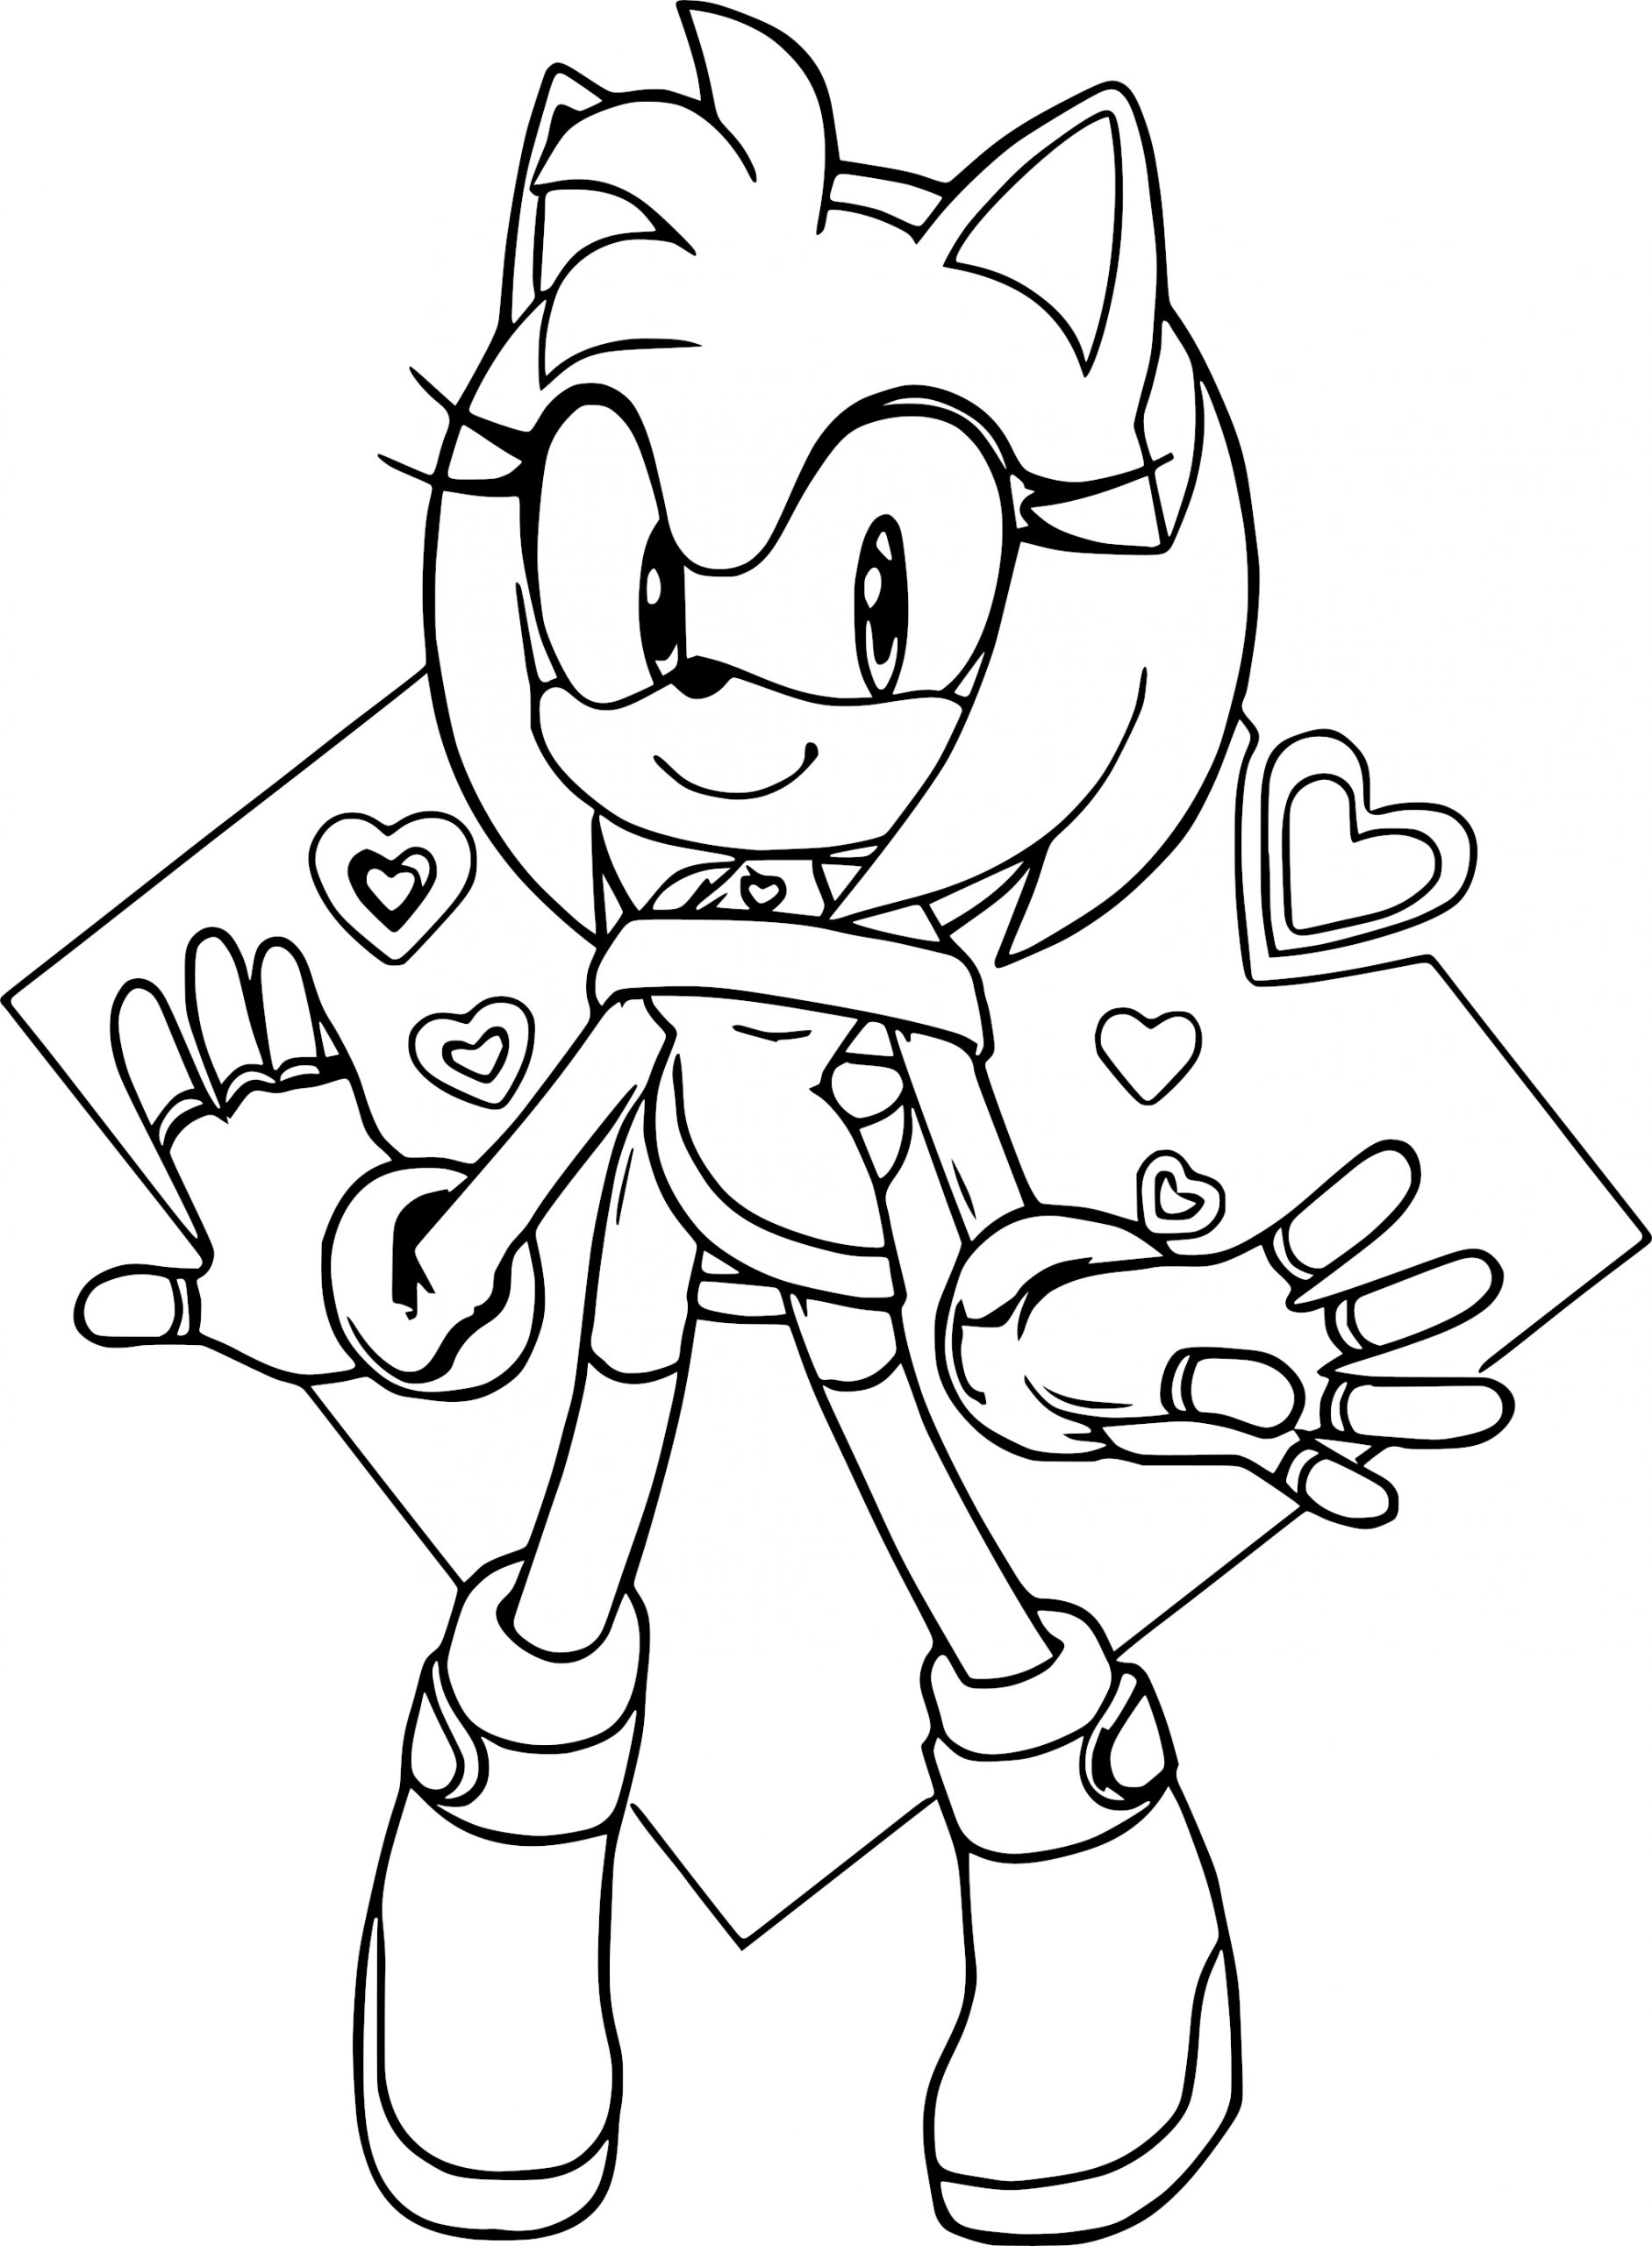 Amy Rose l’amoureuse de Sonic